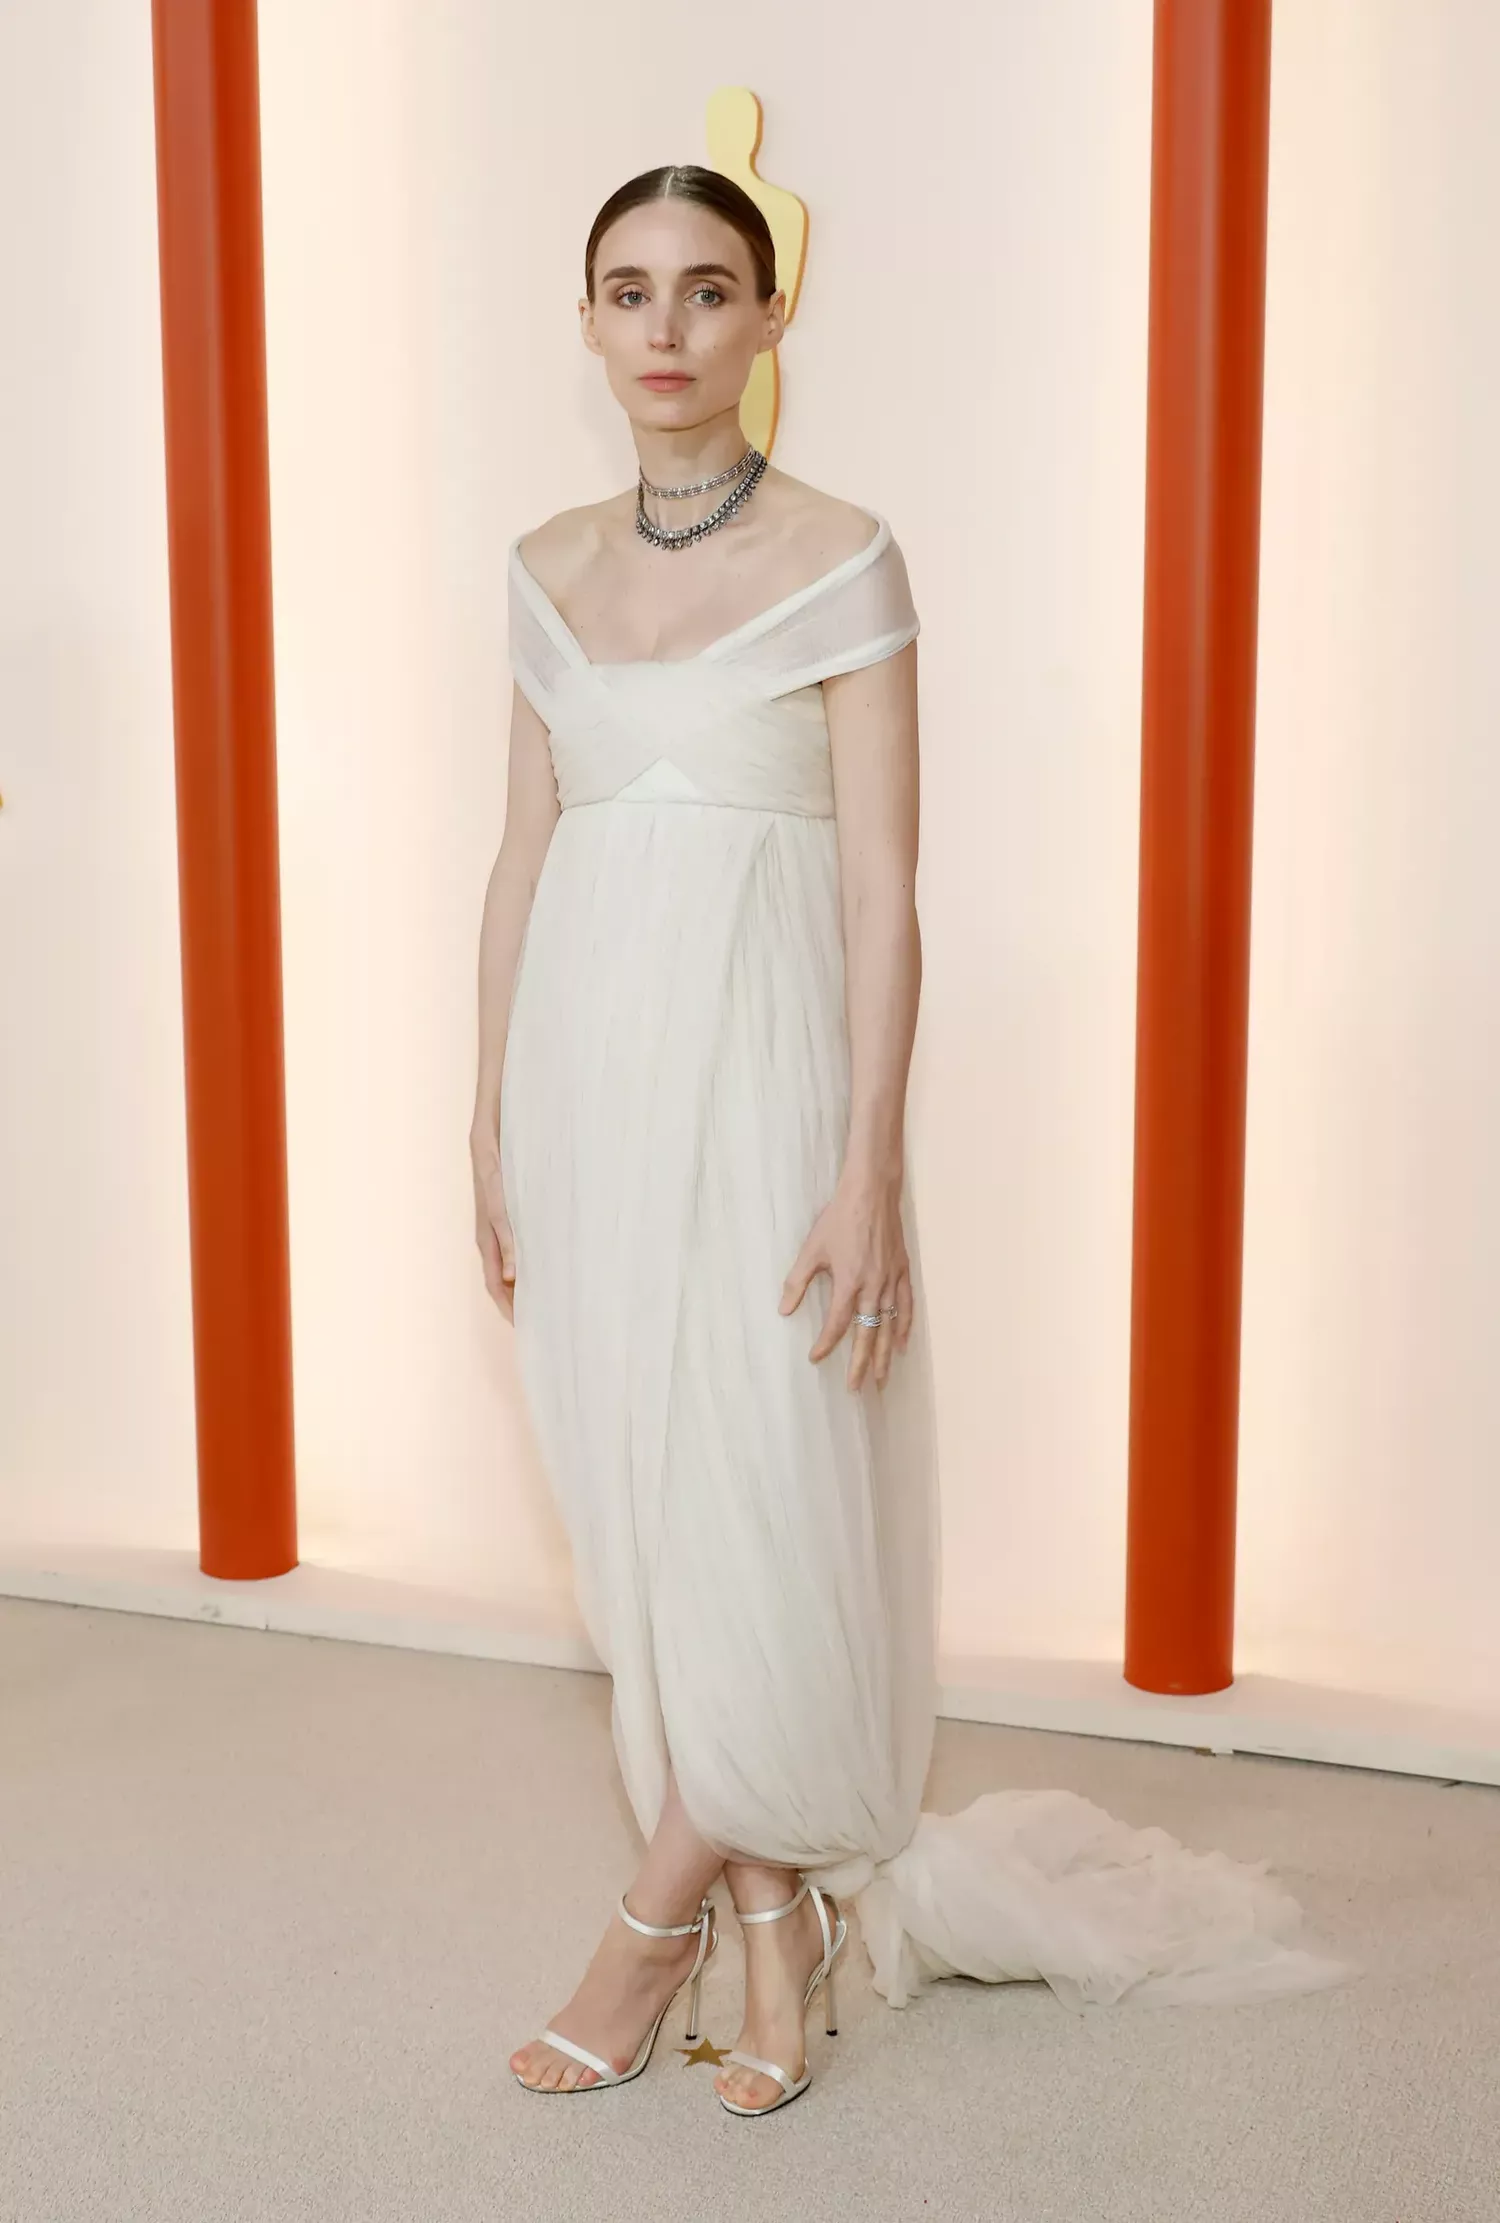 Rooney Mara at the Academy Awards in 2008 Alexander McQueen